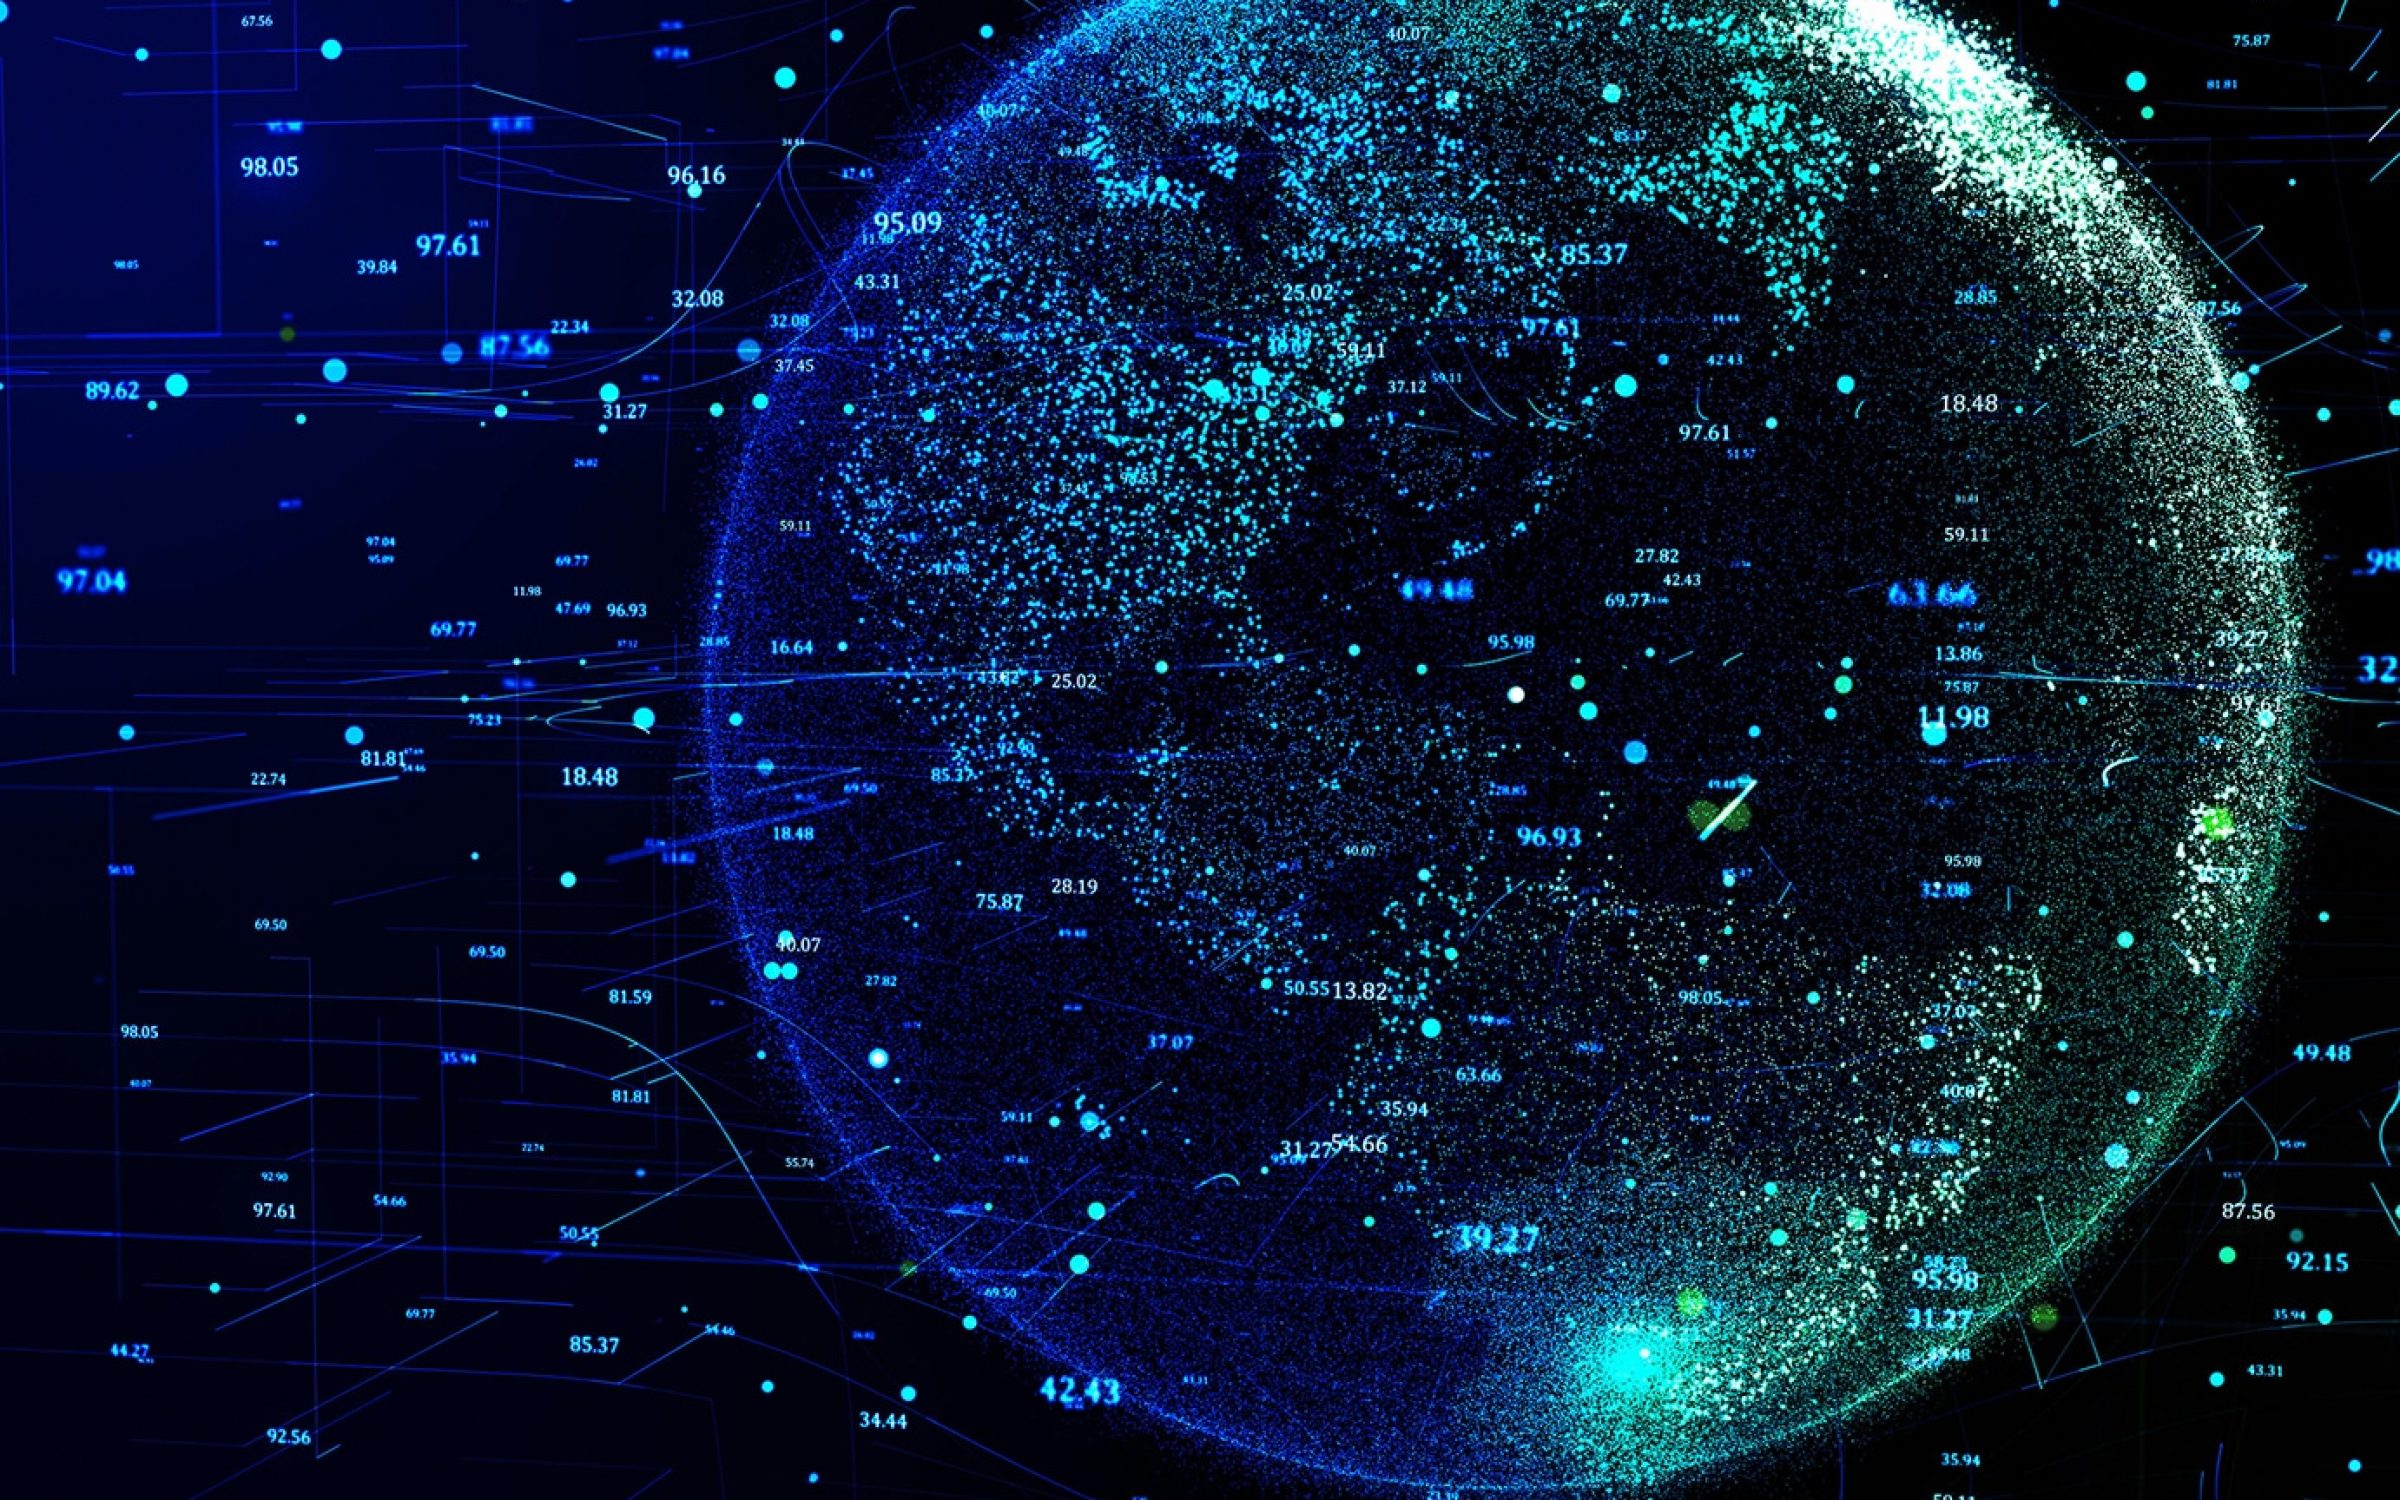 R9B2PK Blue Planet Earth rotating in global futuristic cyber network